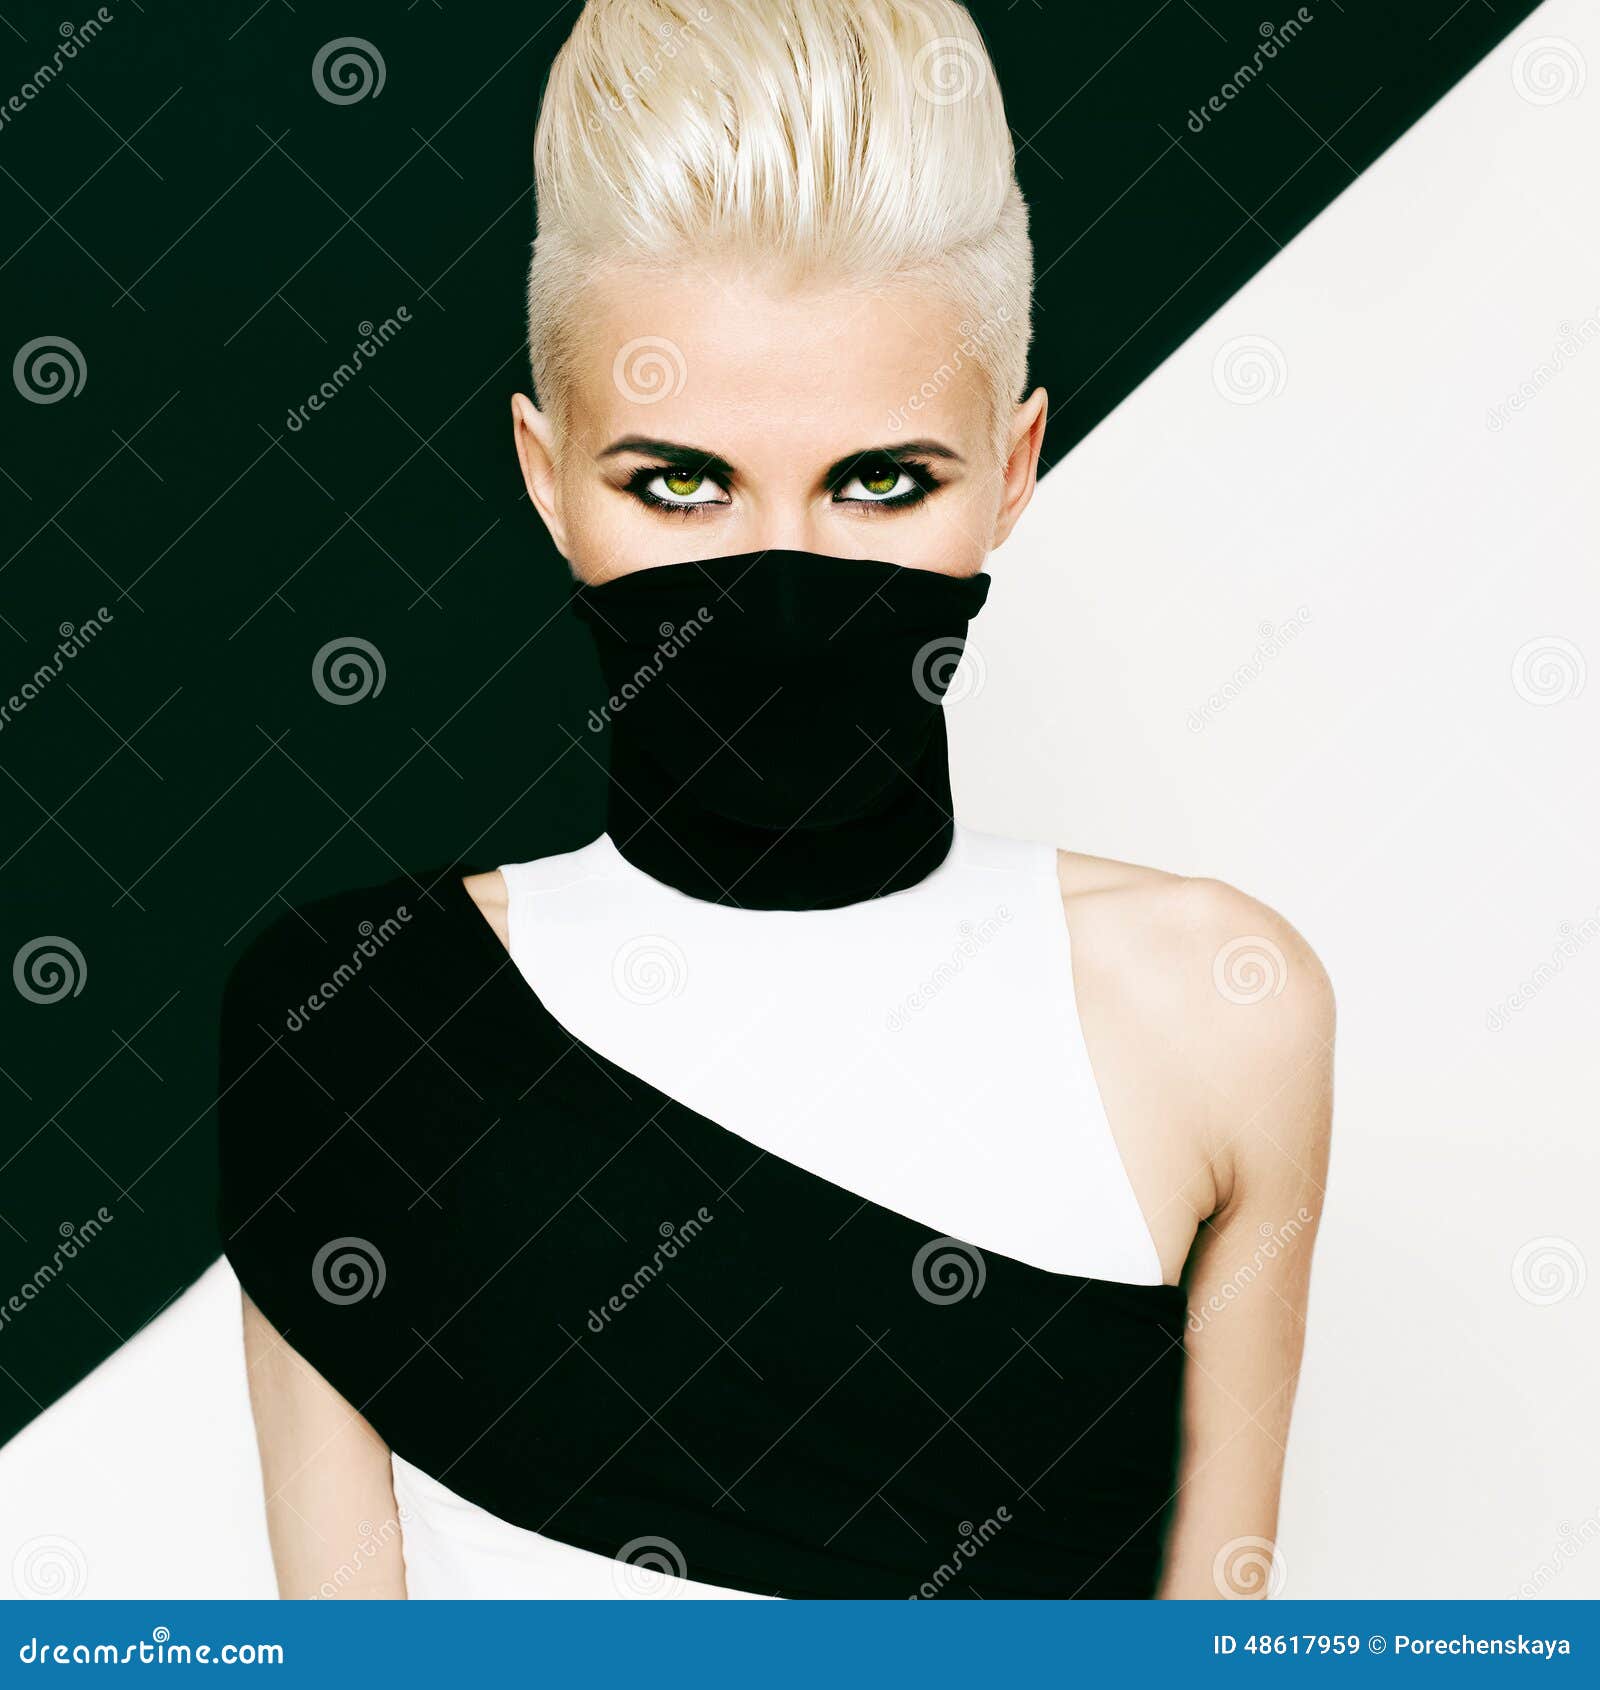 Black and White Background Girl Ninja Style. Fashionable Hairstyle